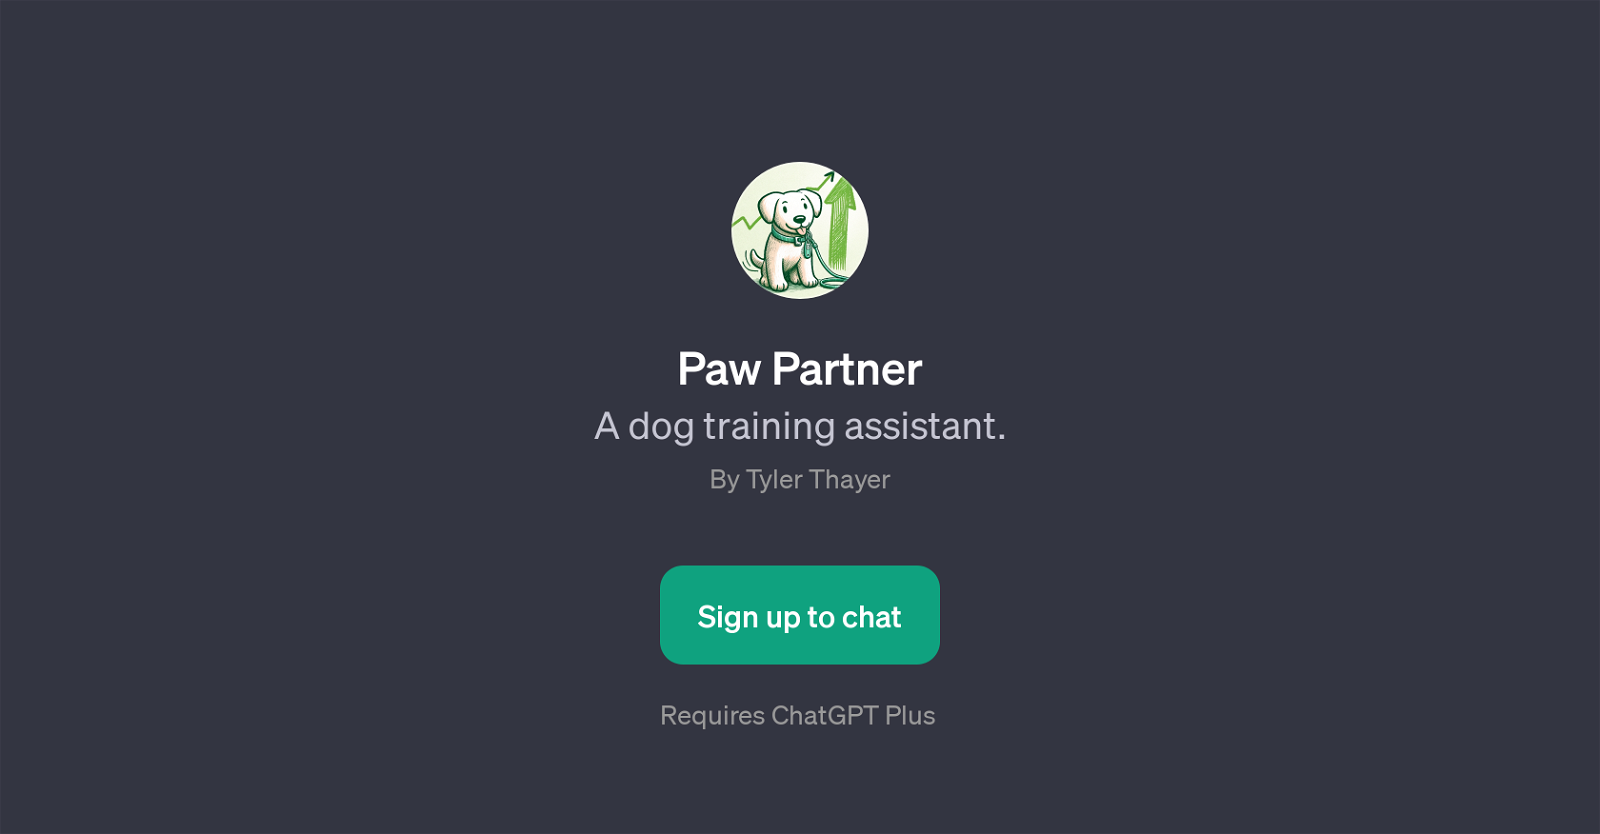 Paw Partner website